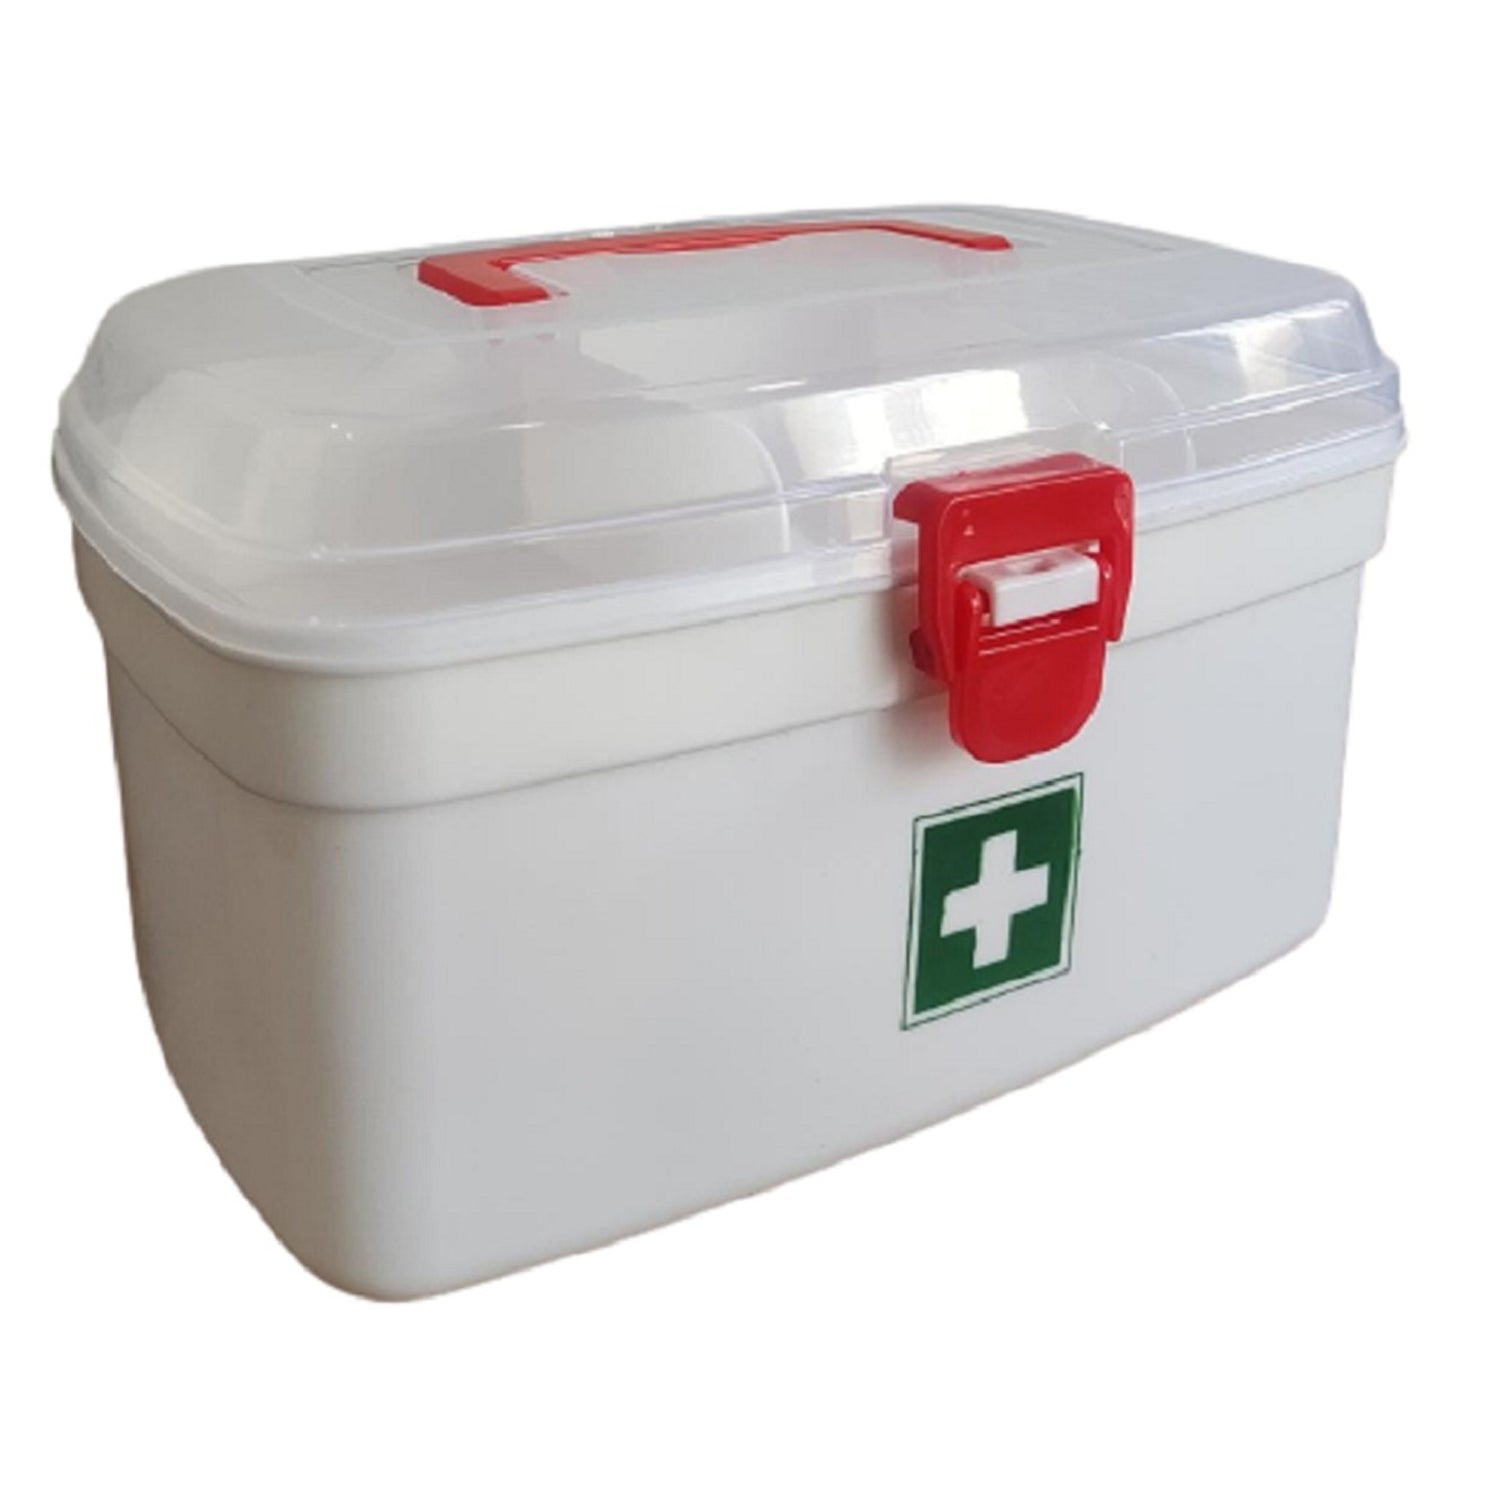 6412 Medical Box, 1 Piece,Indoor Outdoor Medical Utility,Medicine Storage Box,,Detachable Tray Medical Box Multi Purpose Regular Medicine, First Aid Box with Handle, DeoDap